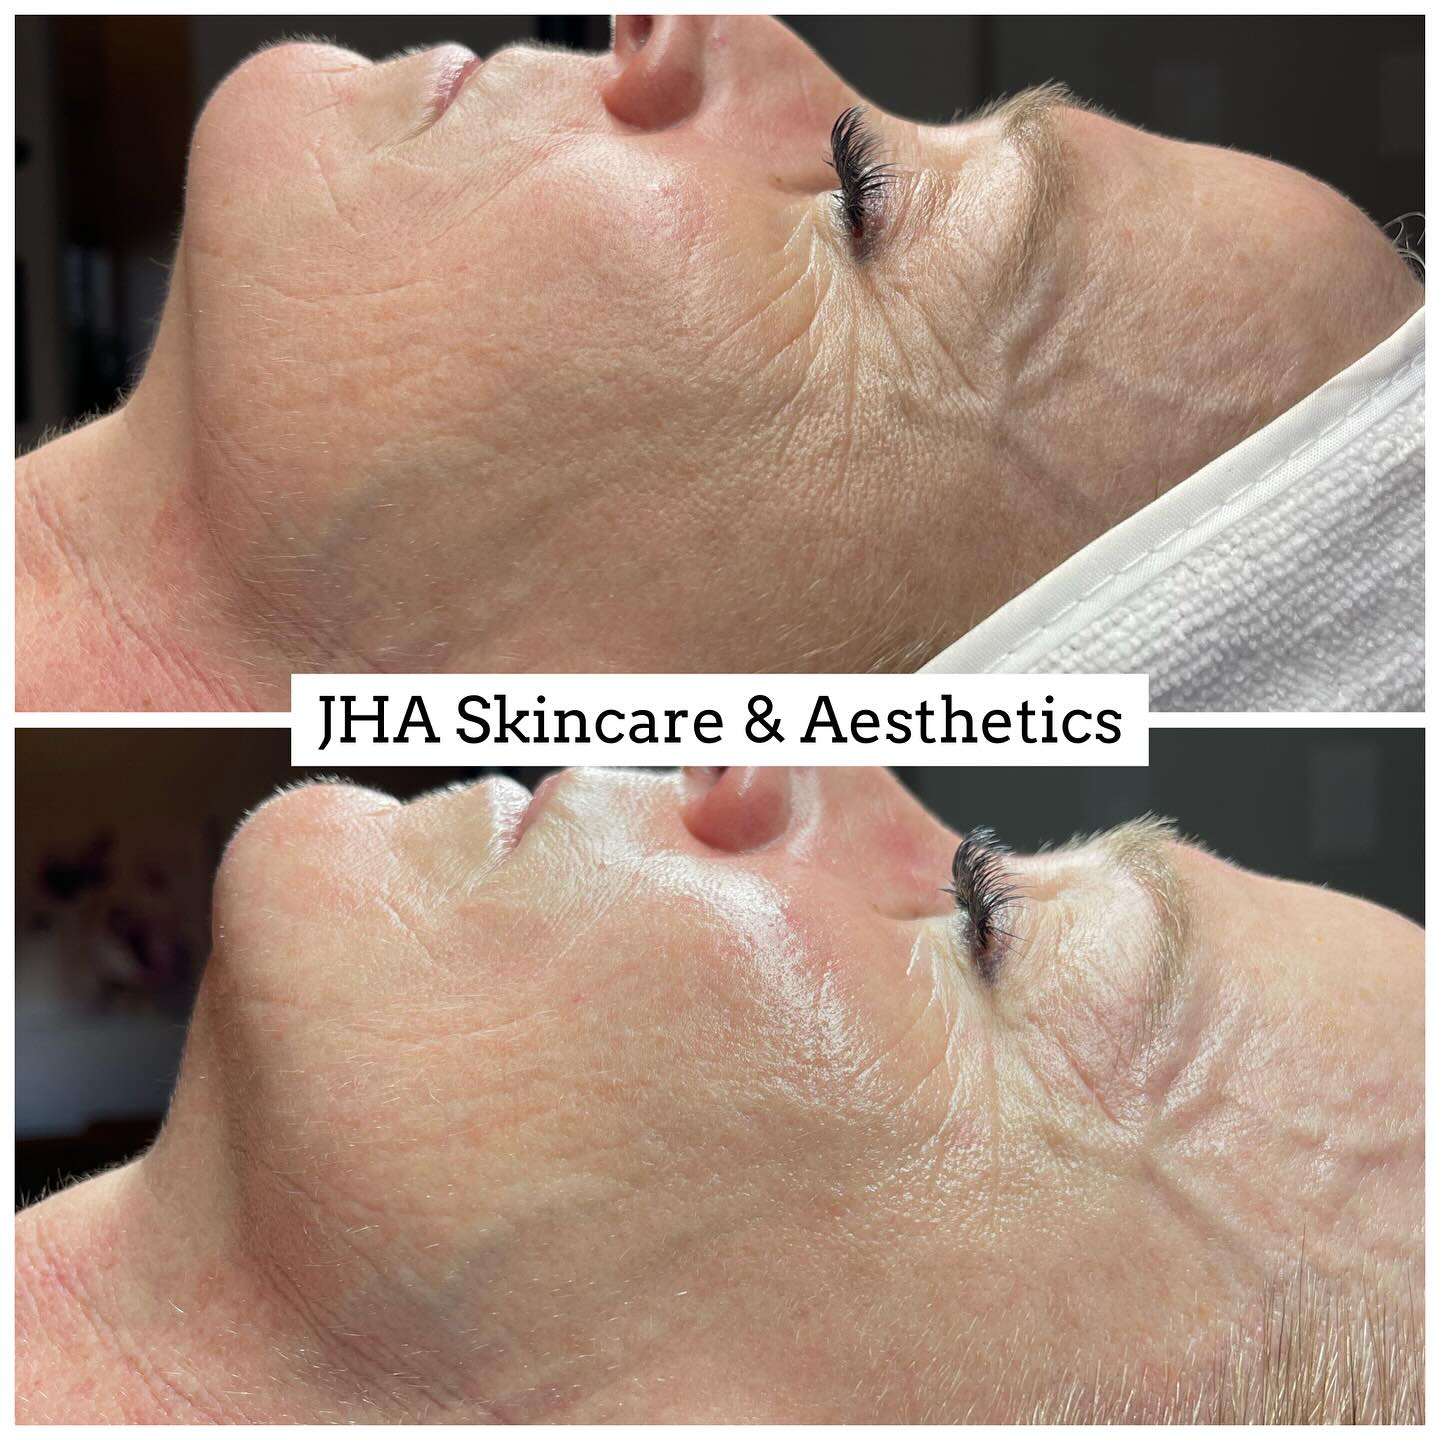 JHA Skincare & Aesthetics 3384 W 4600 S Suite 3, West Haven Utah 84401